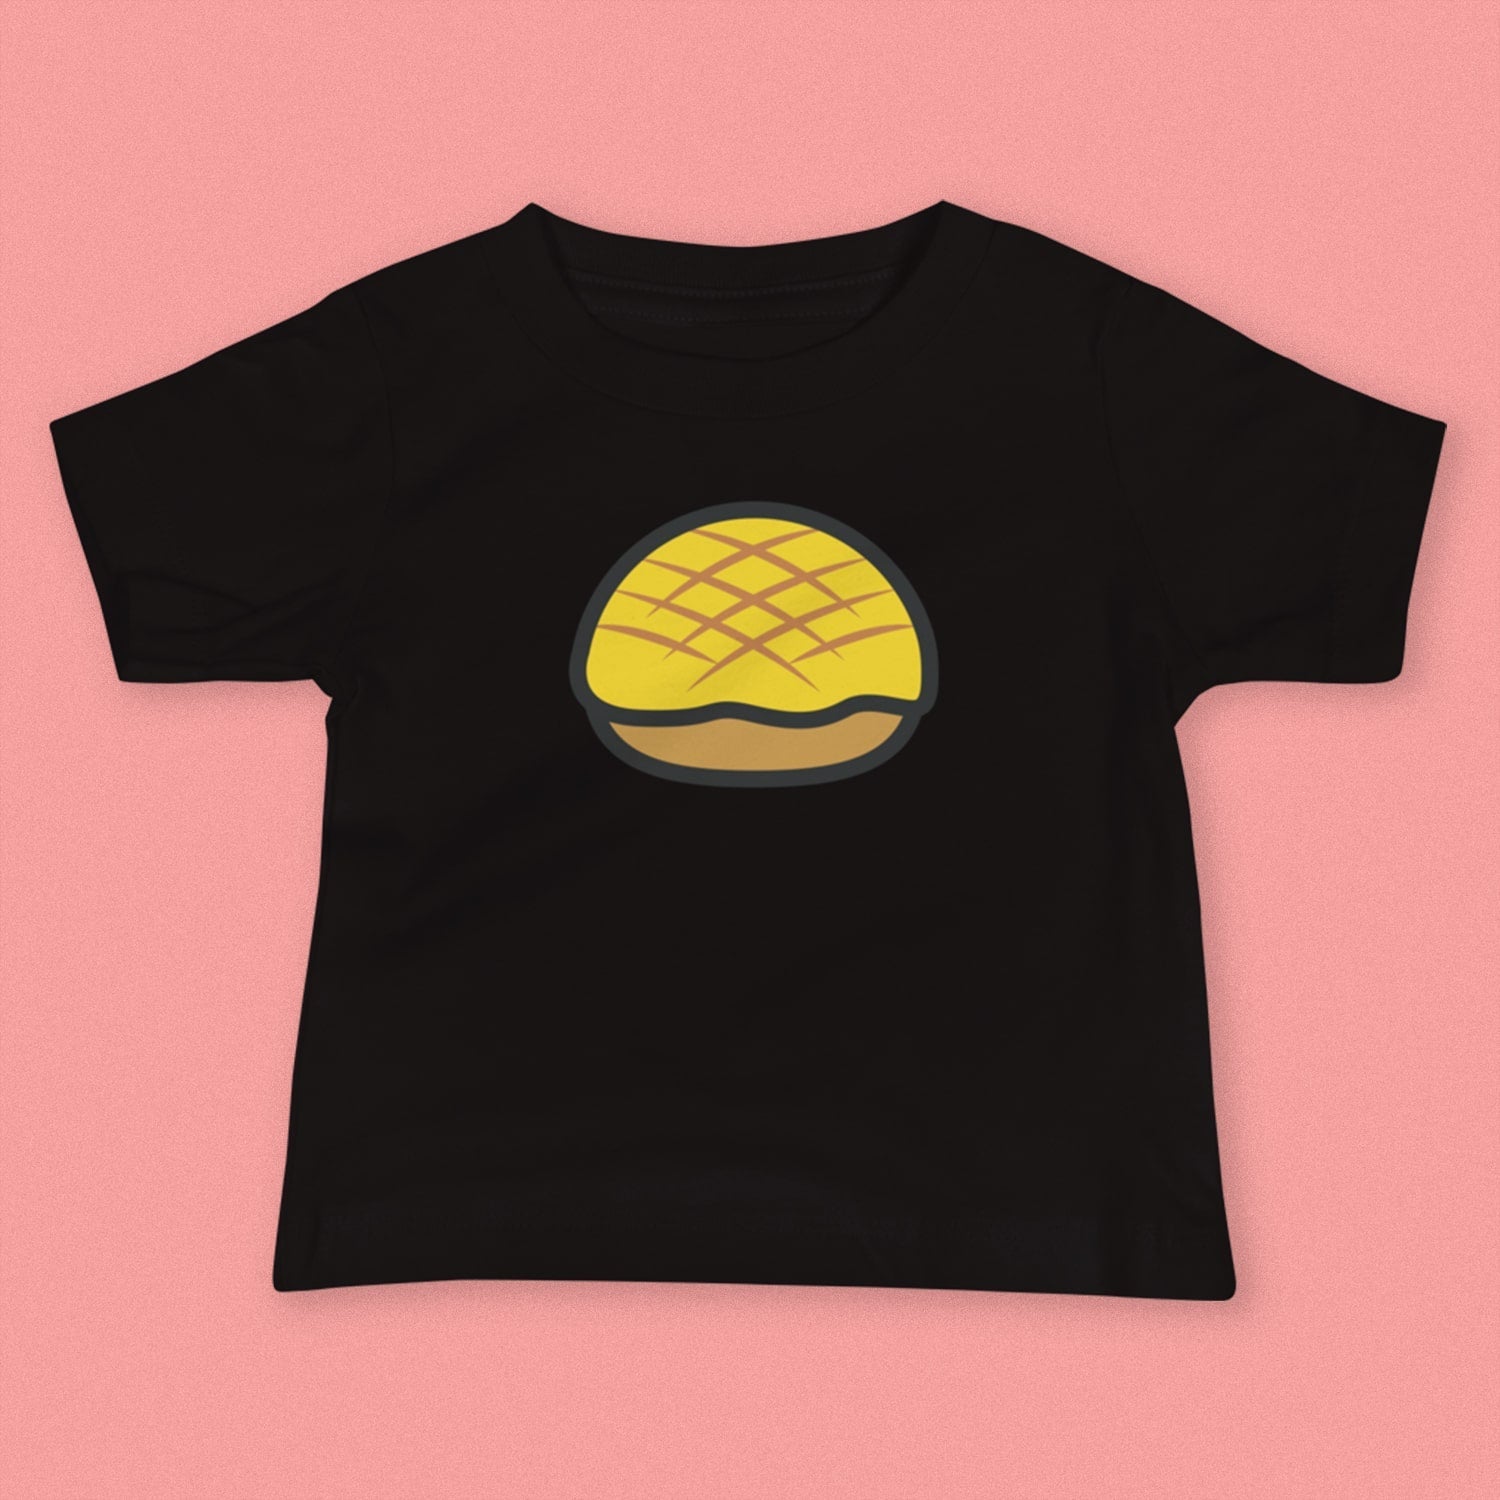 Pineapple Bun Baby T-Shirt - Ni De Mama Chinese Clothing